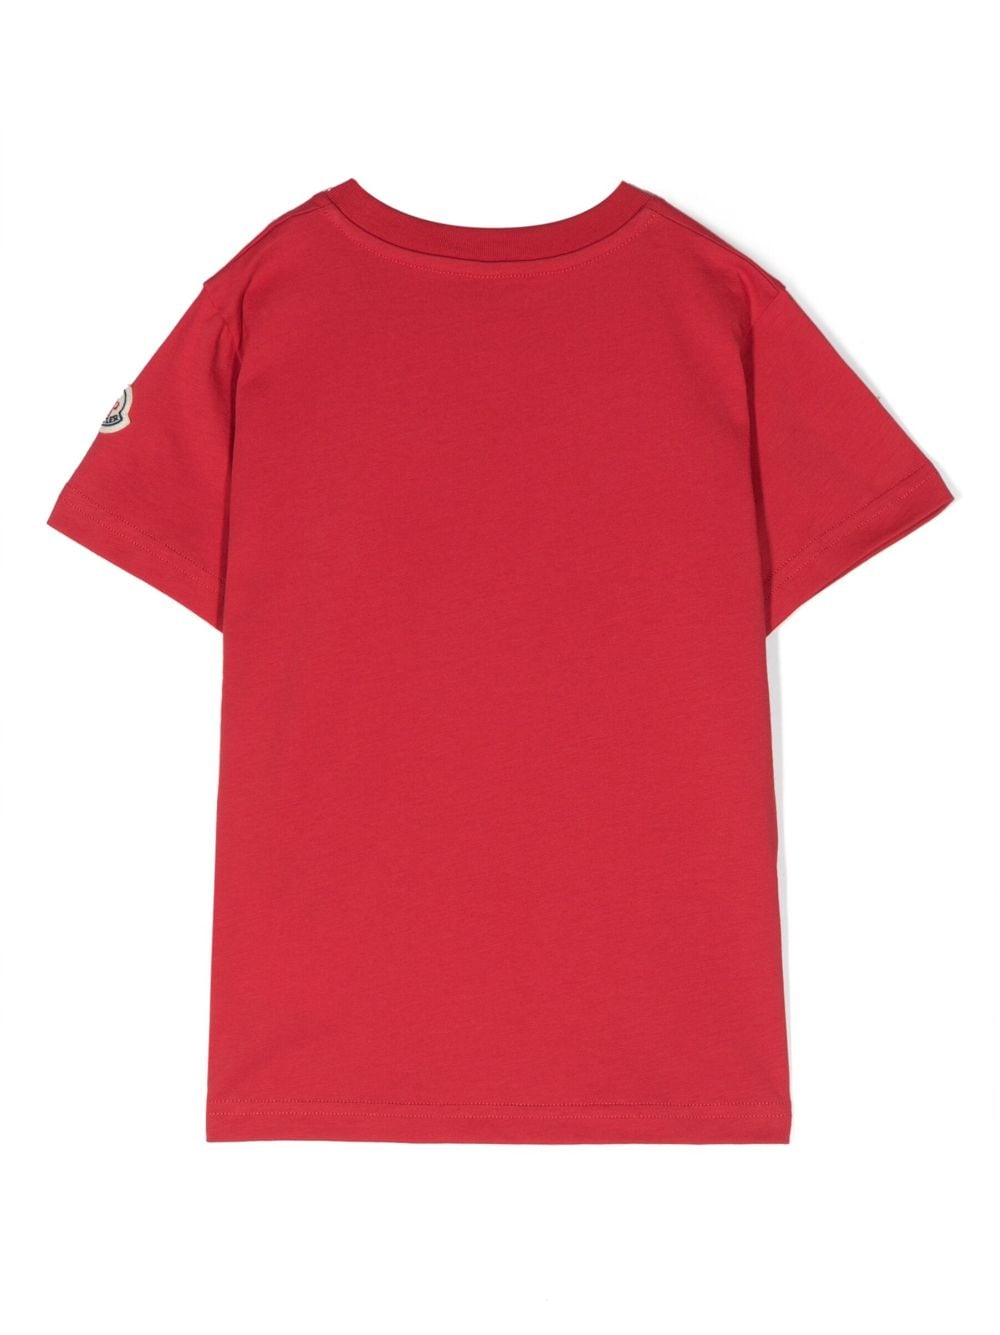 T-shirt rossa unisex